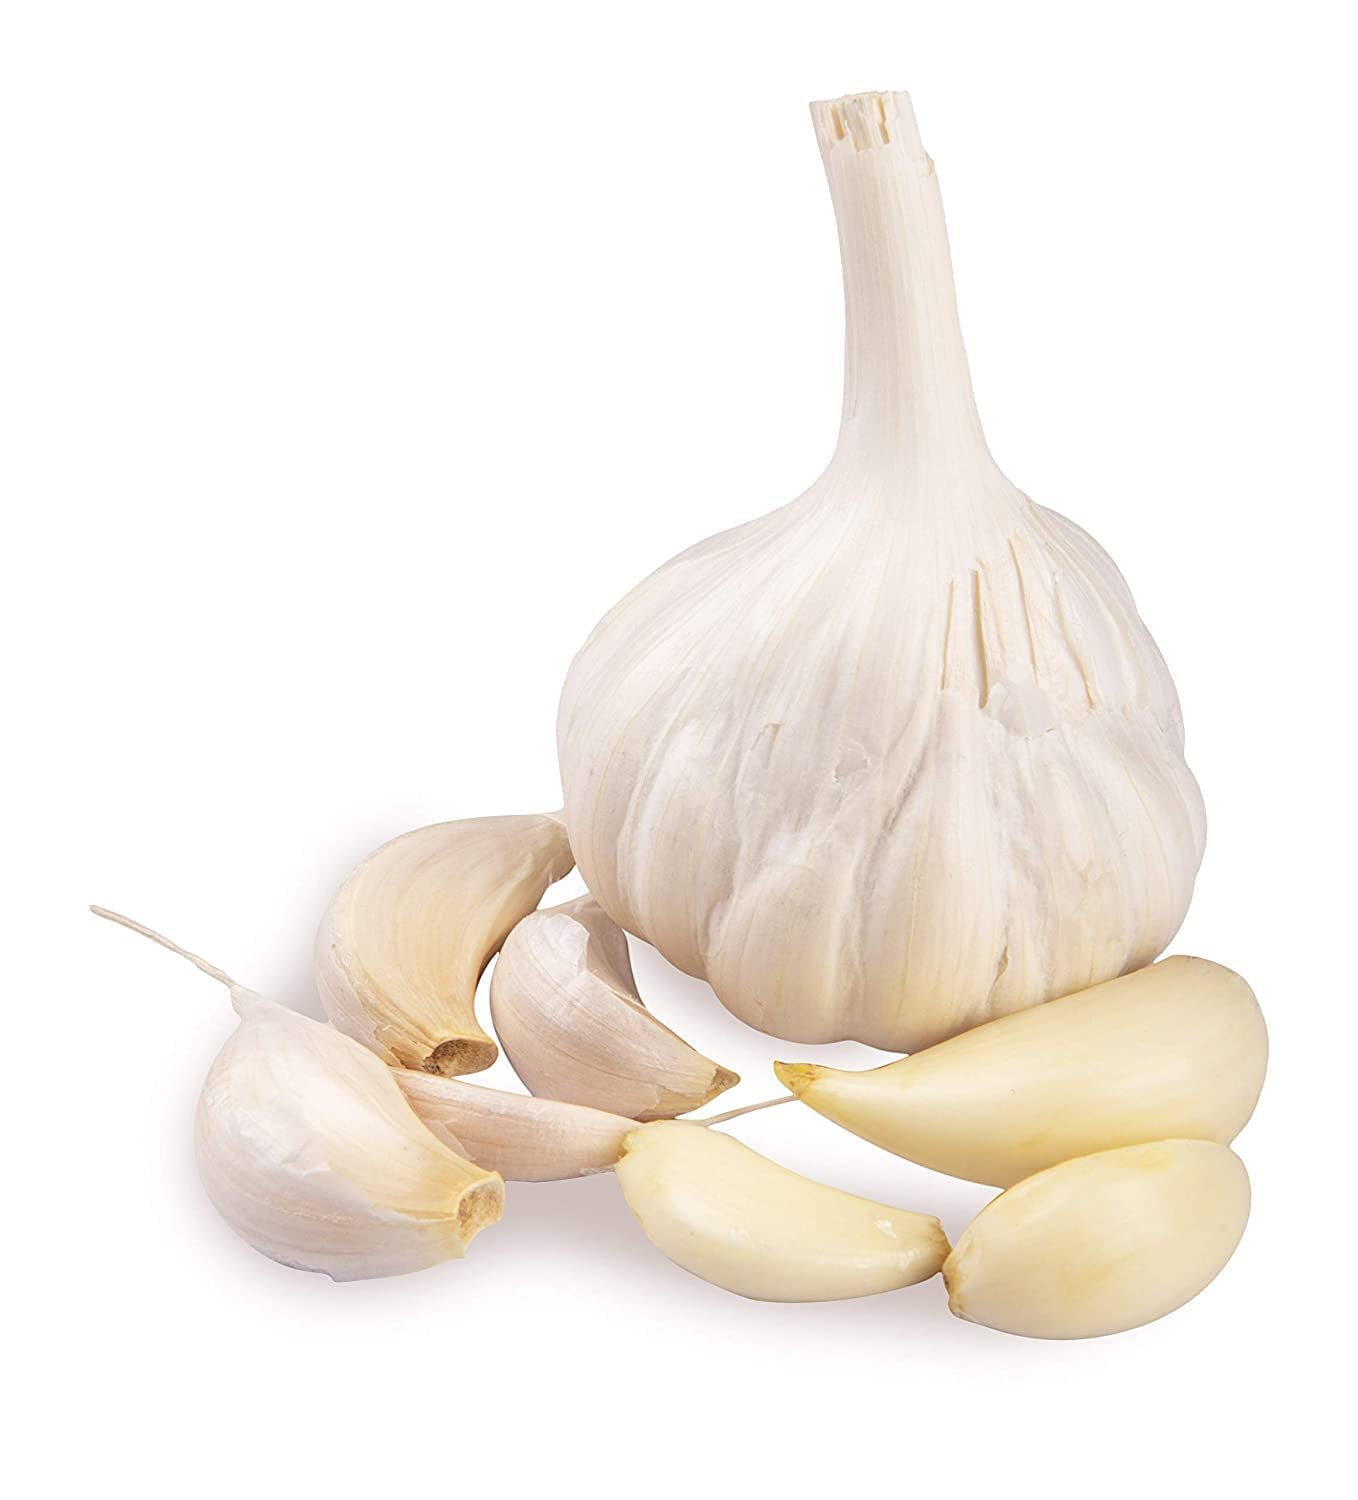 Garlic 3 Pcs 1.29/Each